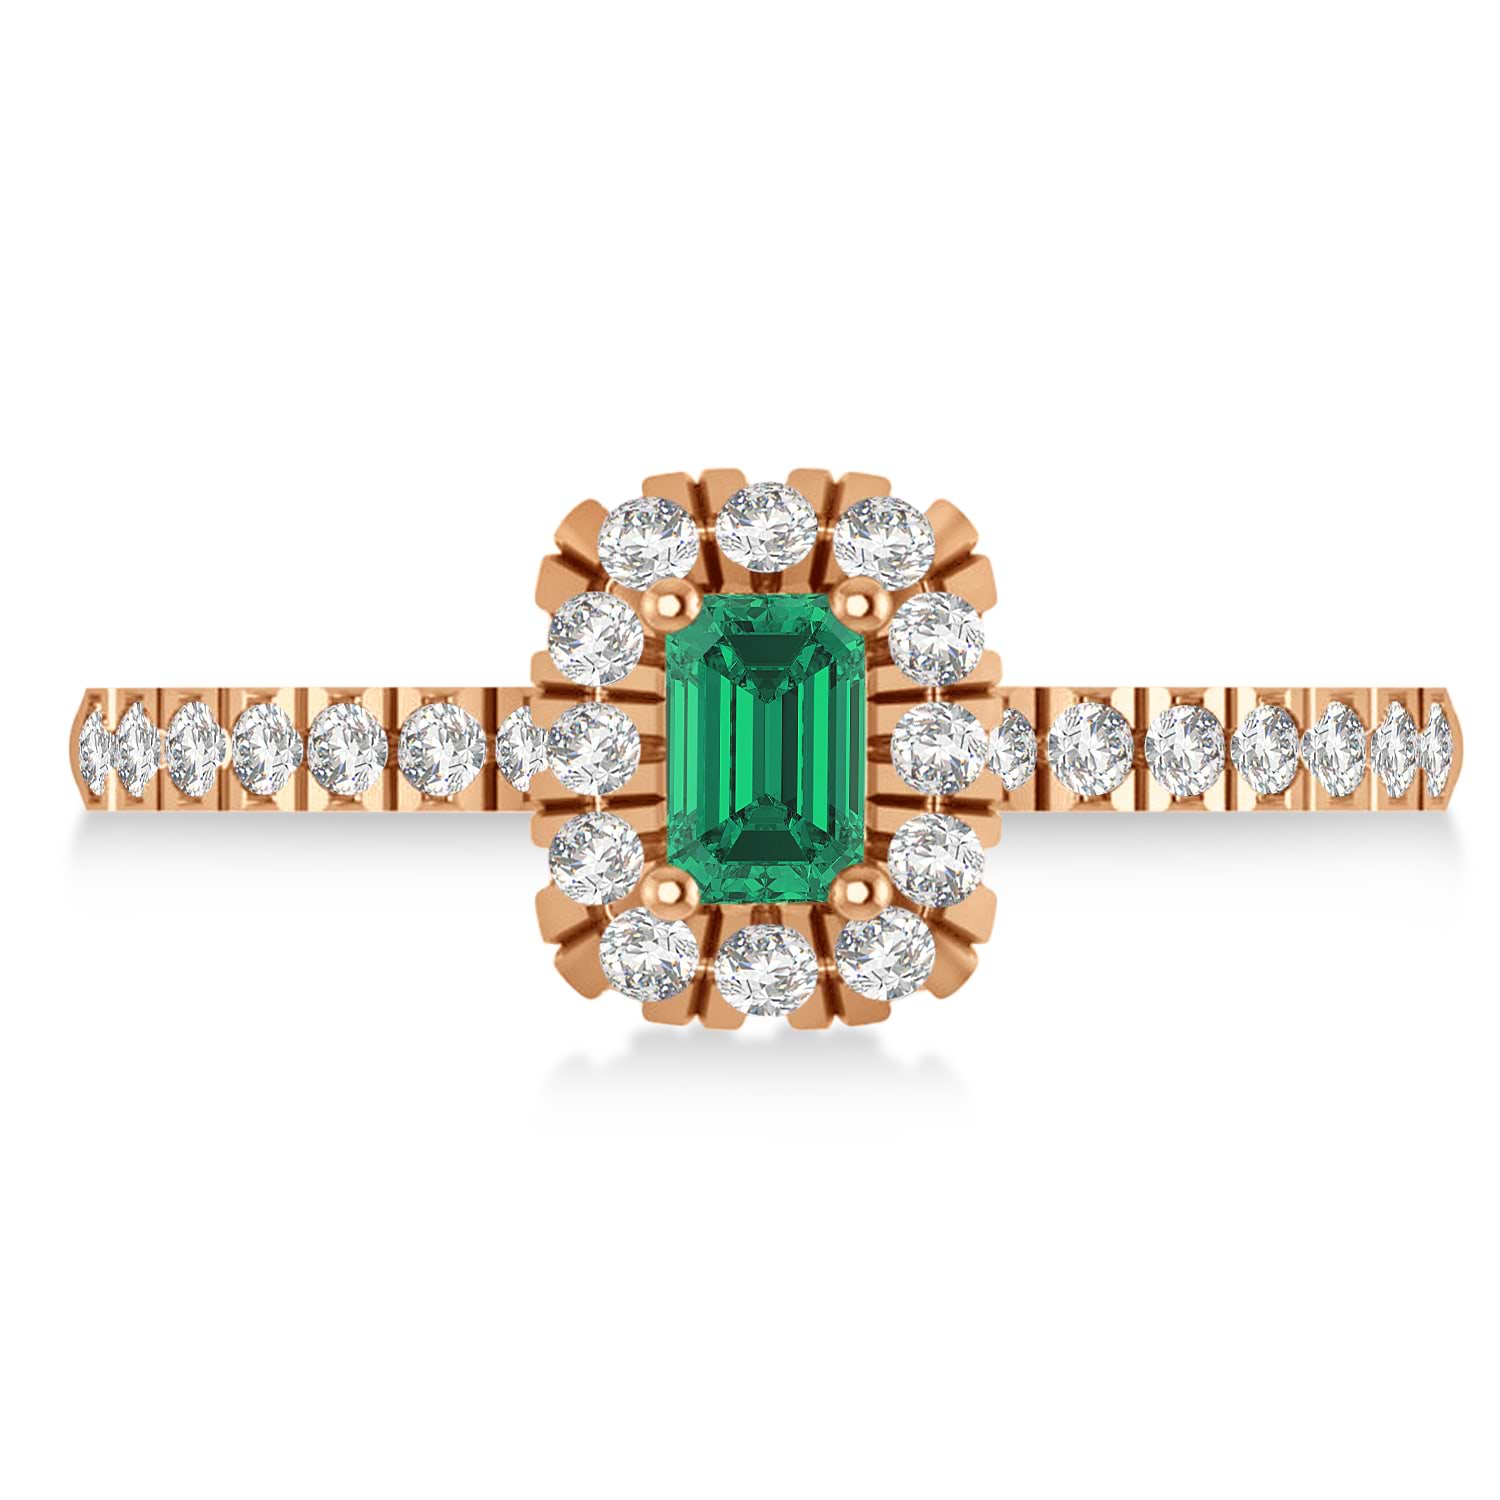 Emerald-Cut Emerald & Diamond Halo Engagement Ring 14k Rose Gold (0.68ct)